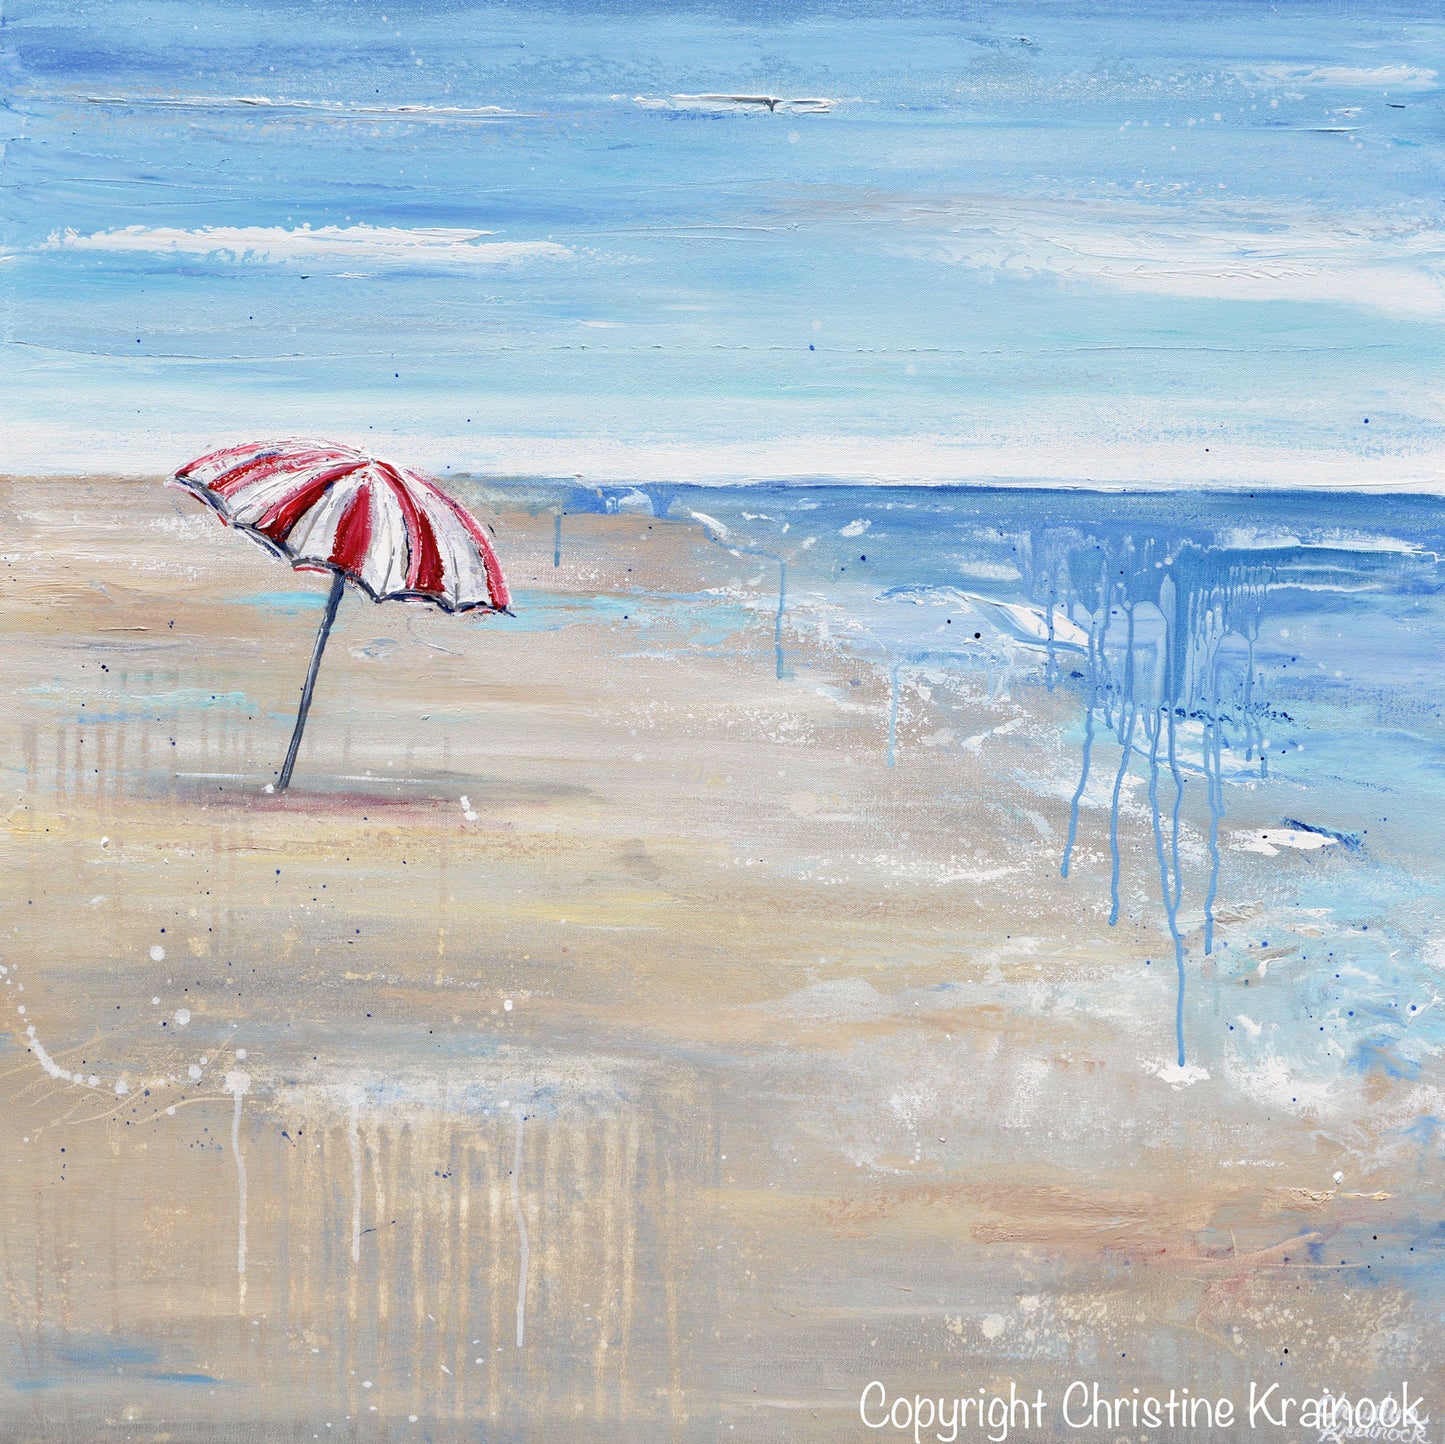 ORIGINAL Art Abstract Painting Seascape Red Beach Umbrella Ocean Blue Coastal Wall Decor 36x36"